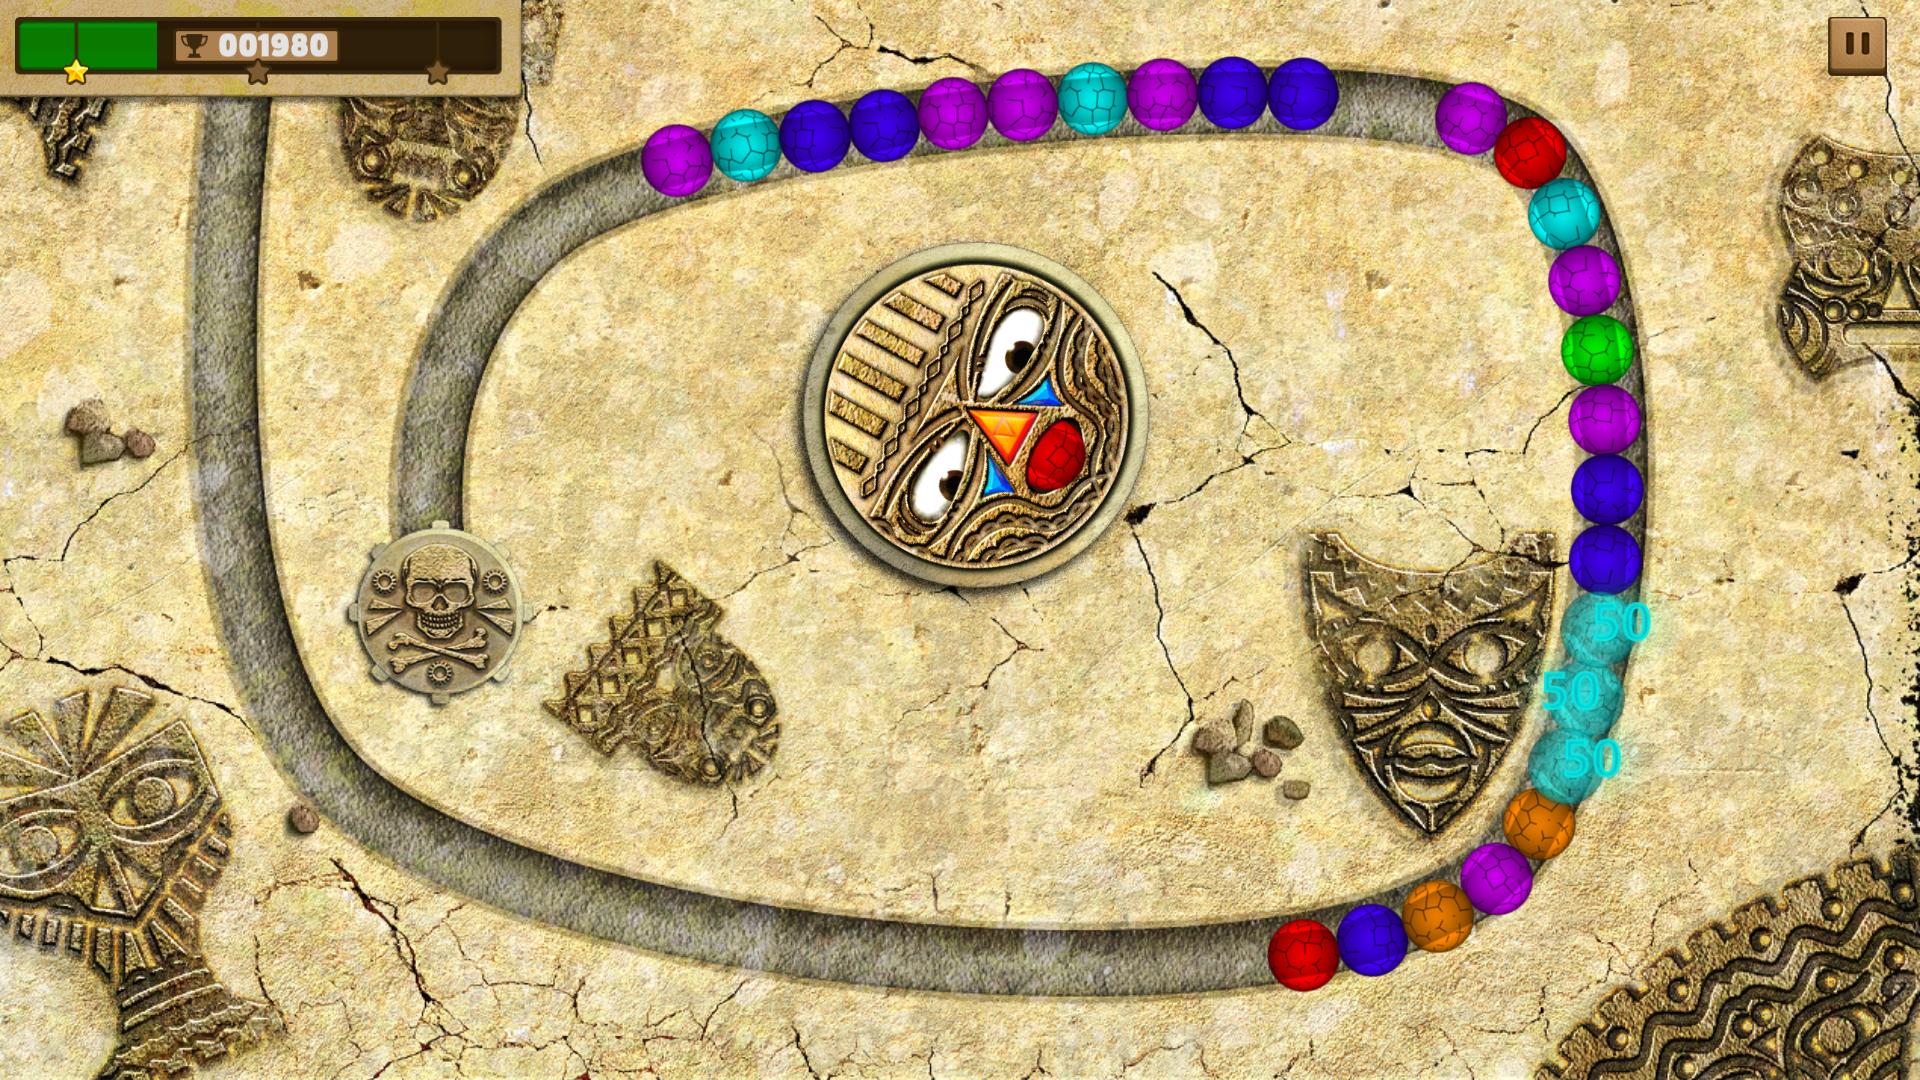 Inca Marbles screenshot